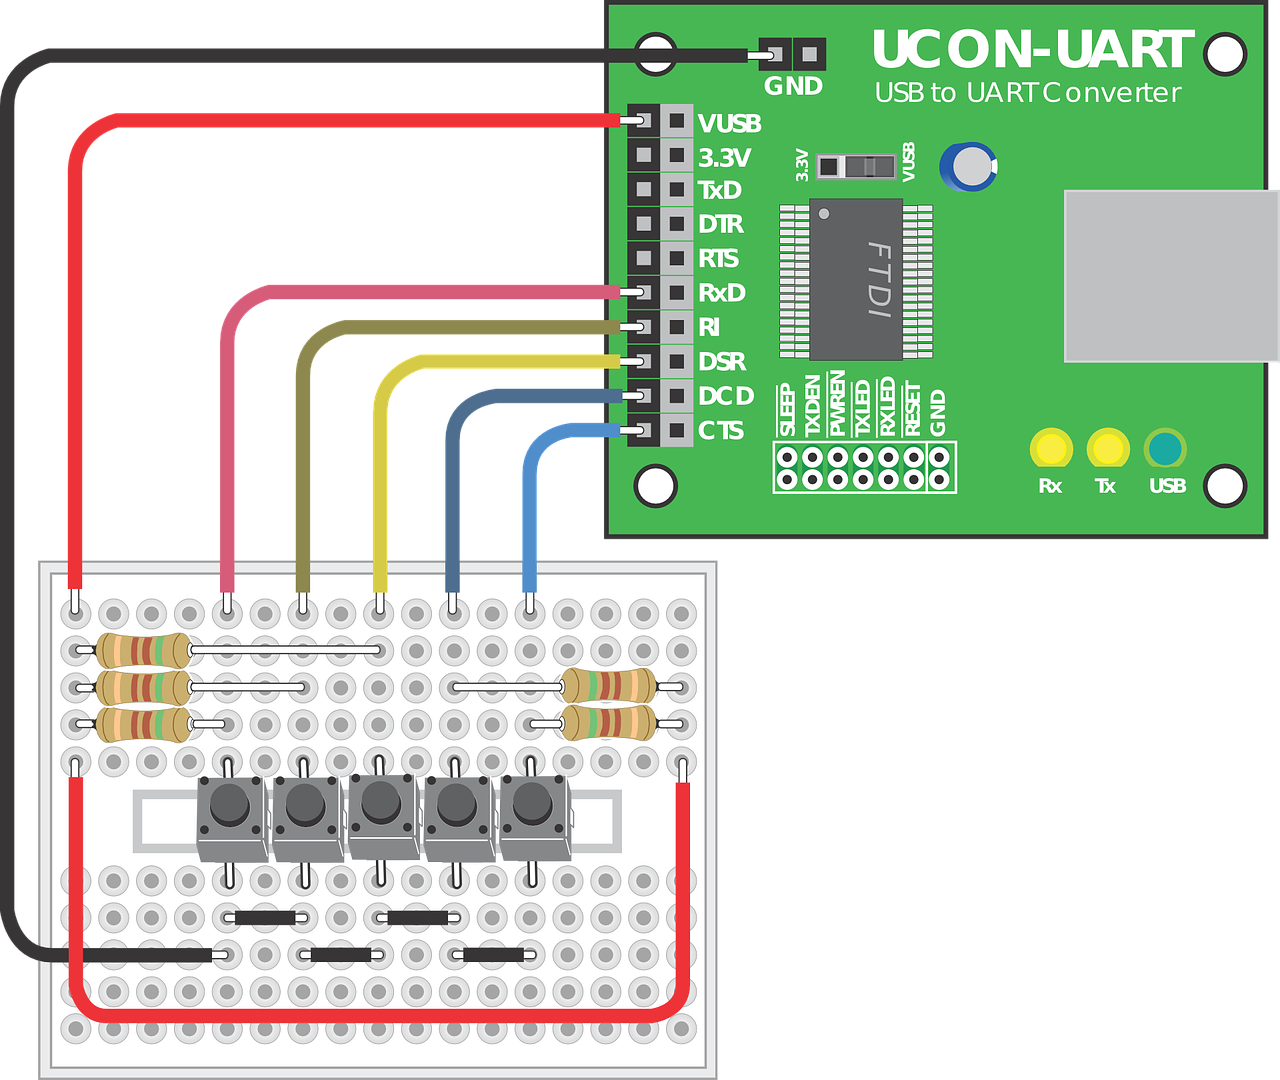 ucon-uart, protoboard, circuitos de electrónica